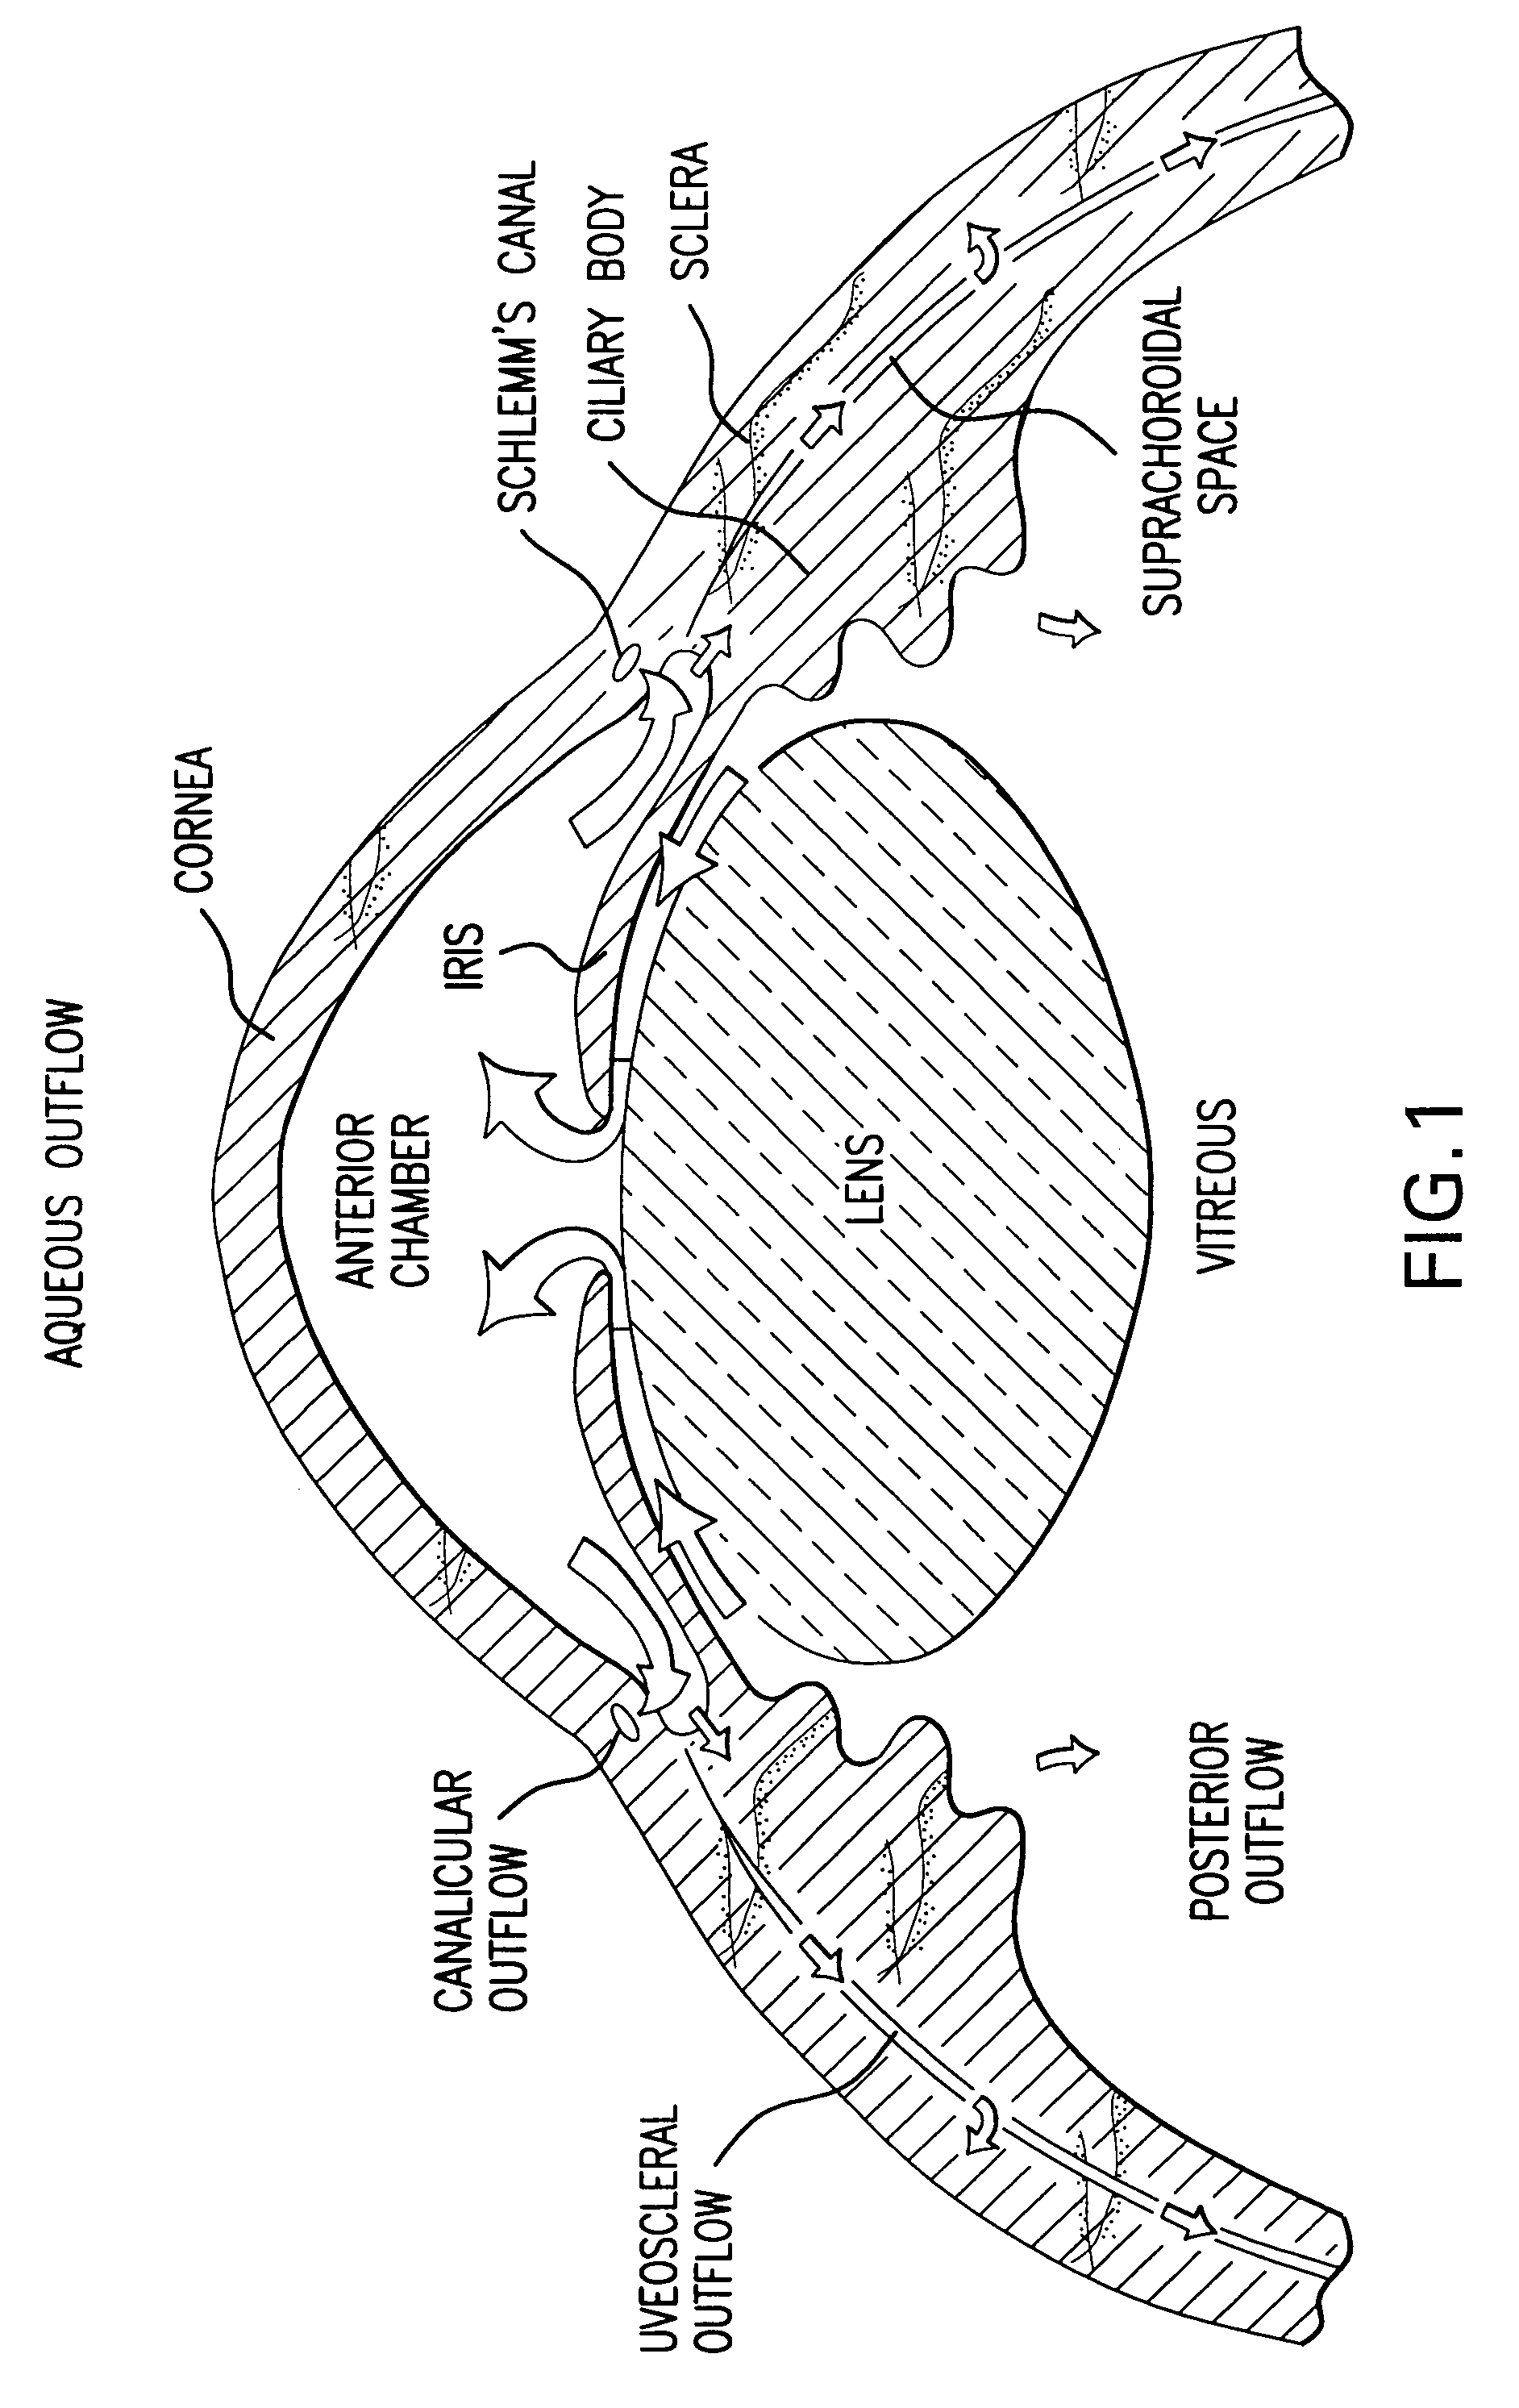 Uveoscleral drainage device